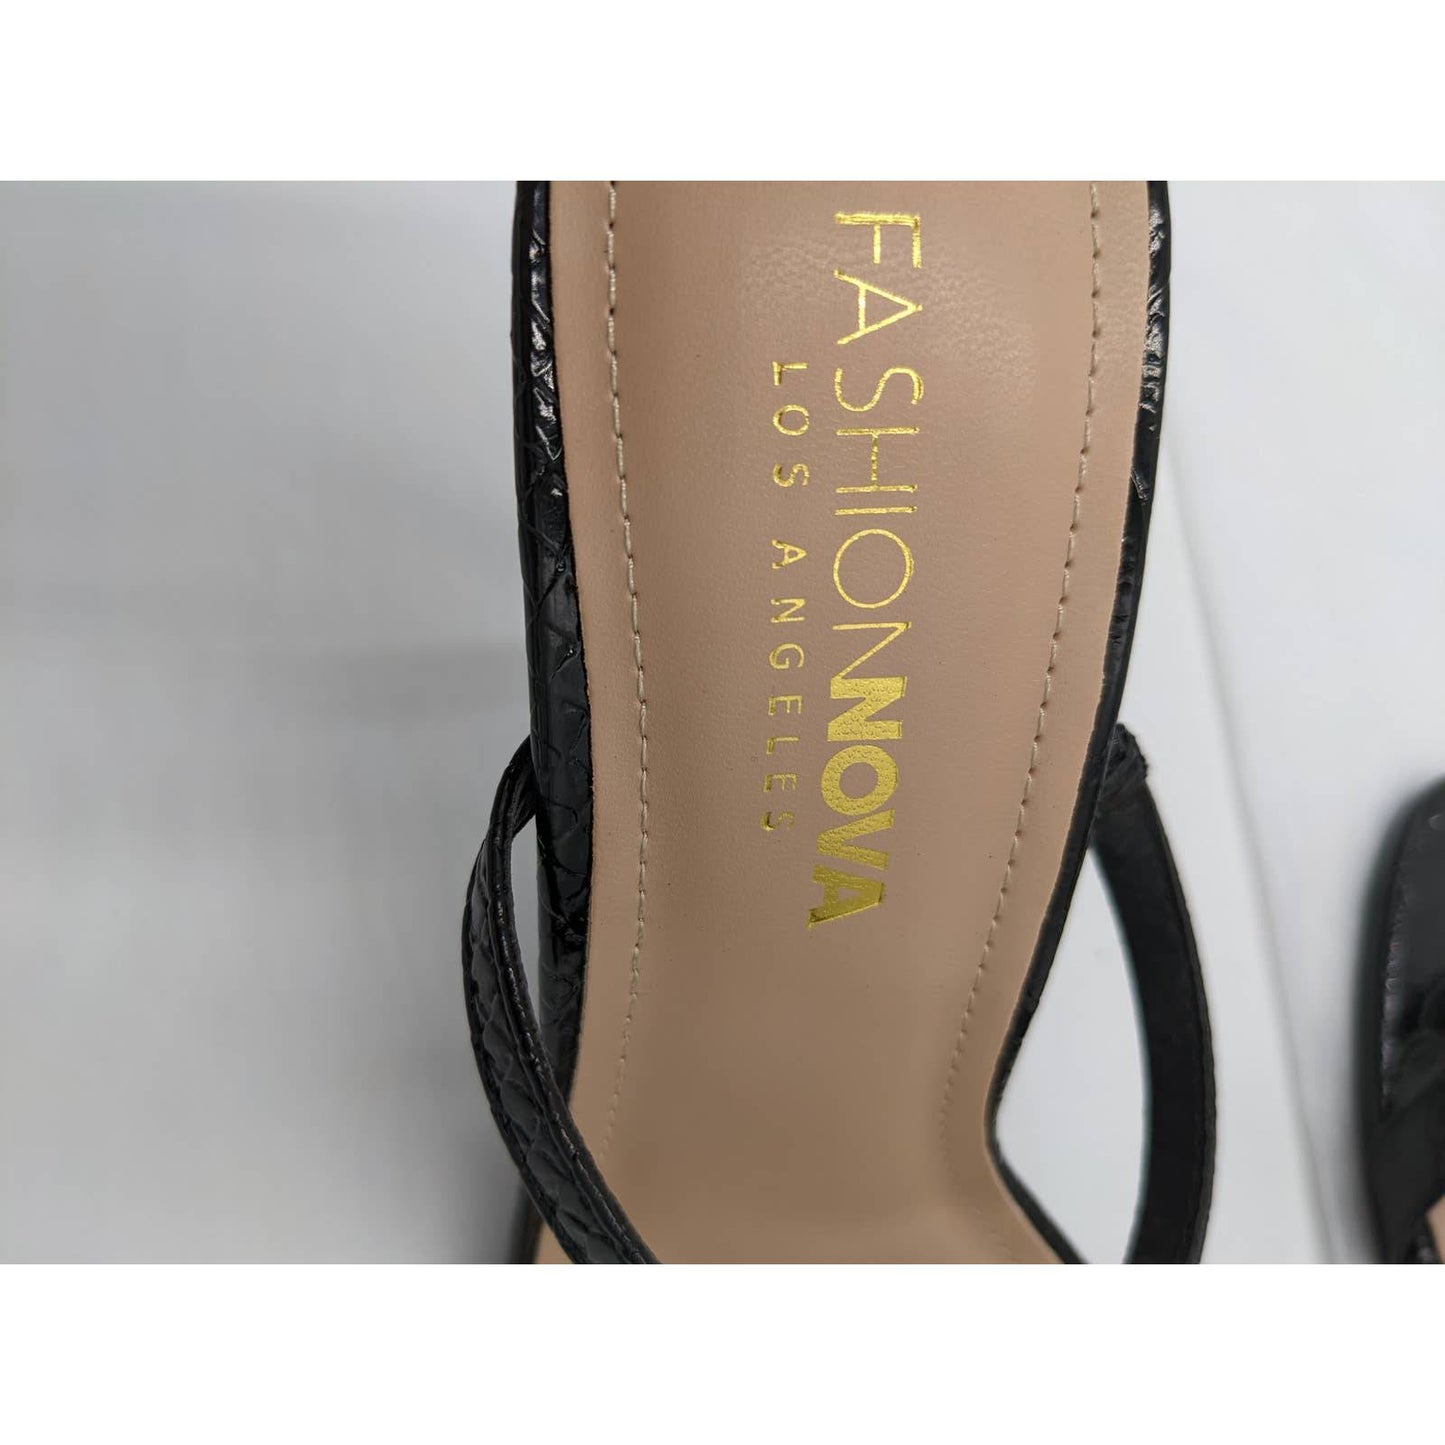 Fashion Nova Adjustable Ankle Strap Open Toe Black Heels Womes Size 7.5